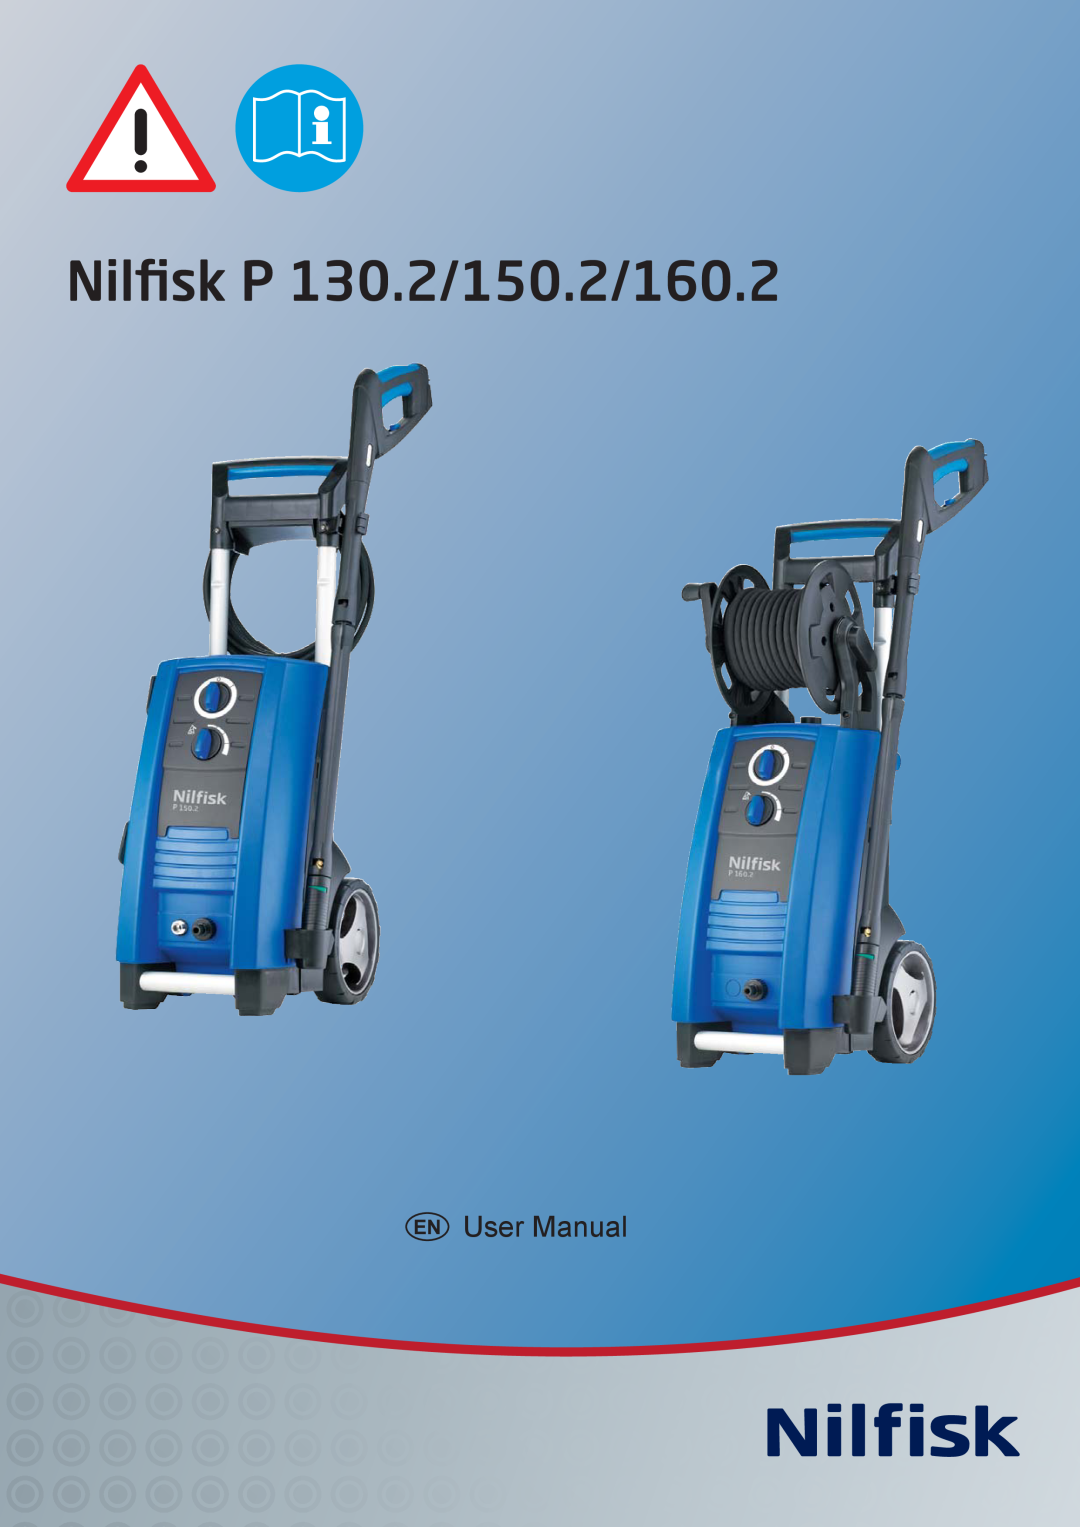 Nilfisk-Advance America P 160.2, P 150.2 user manual Nilfisk P 130.2/150.2/160.2 